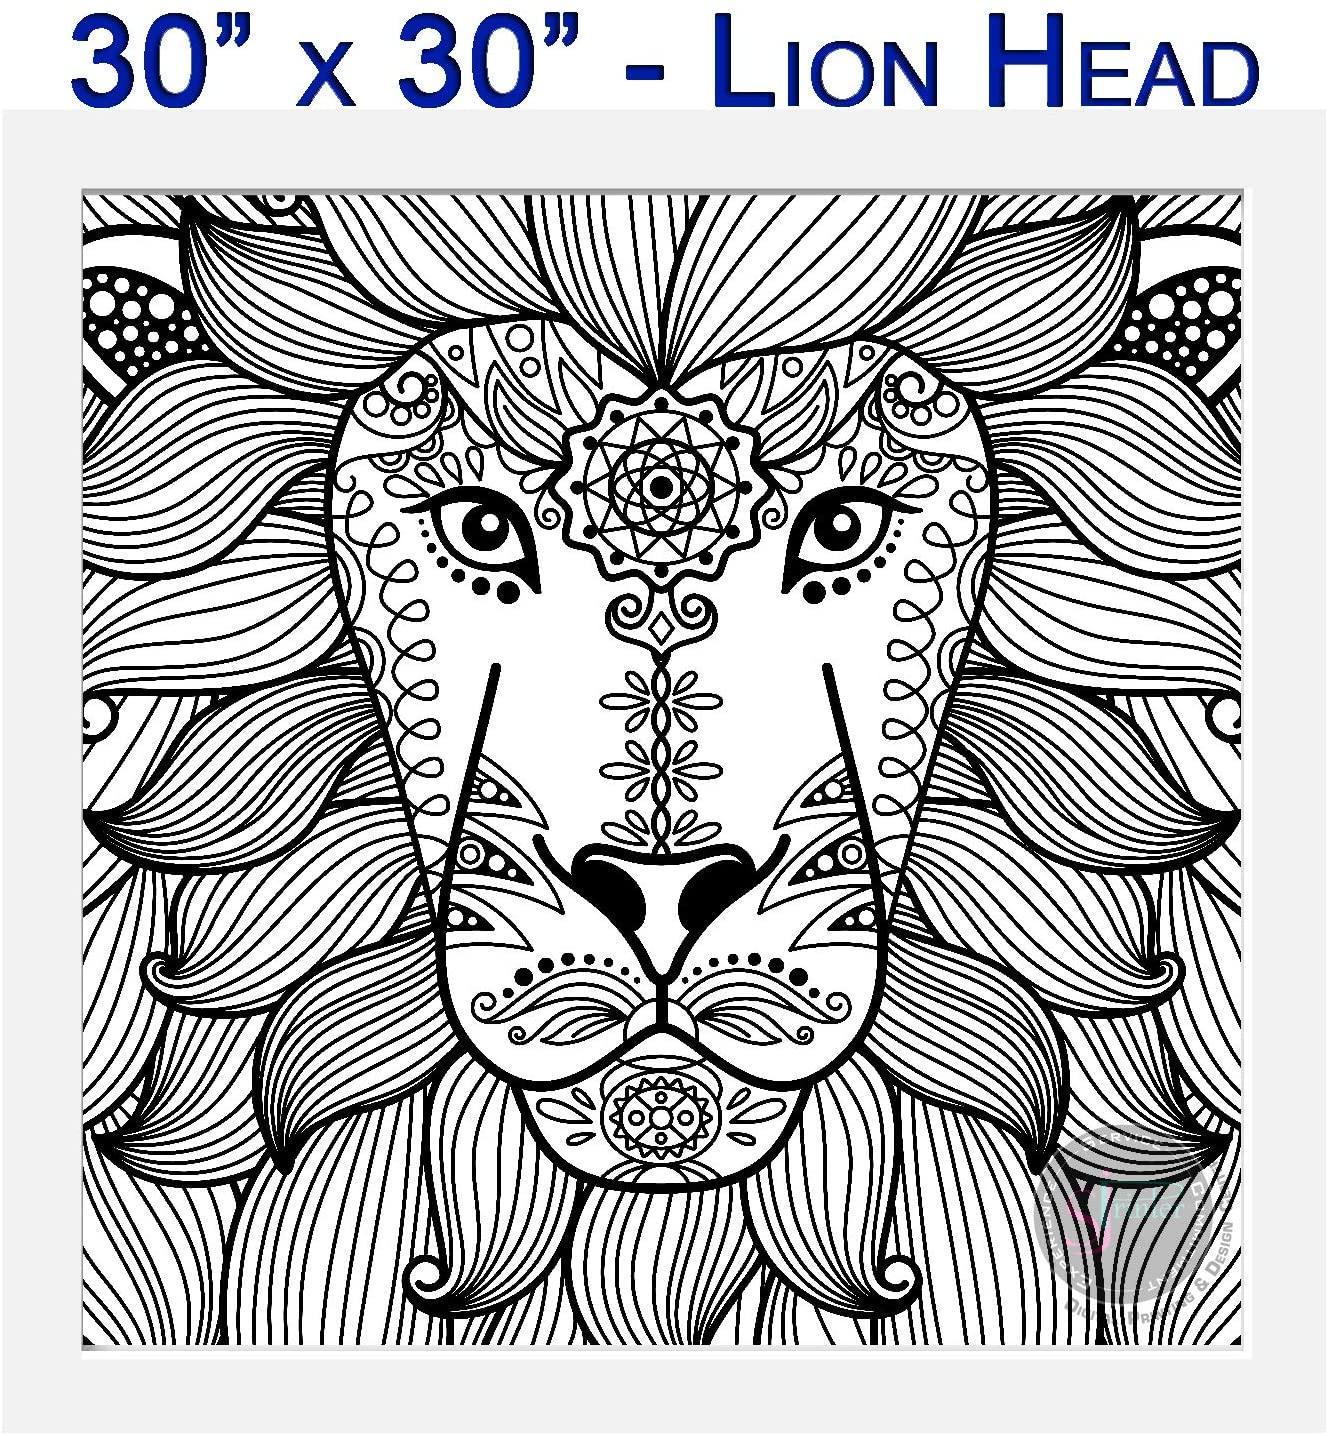 Lion Head Mandala - 30" x 30" - SJPrinter 